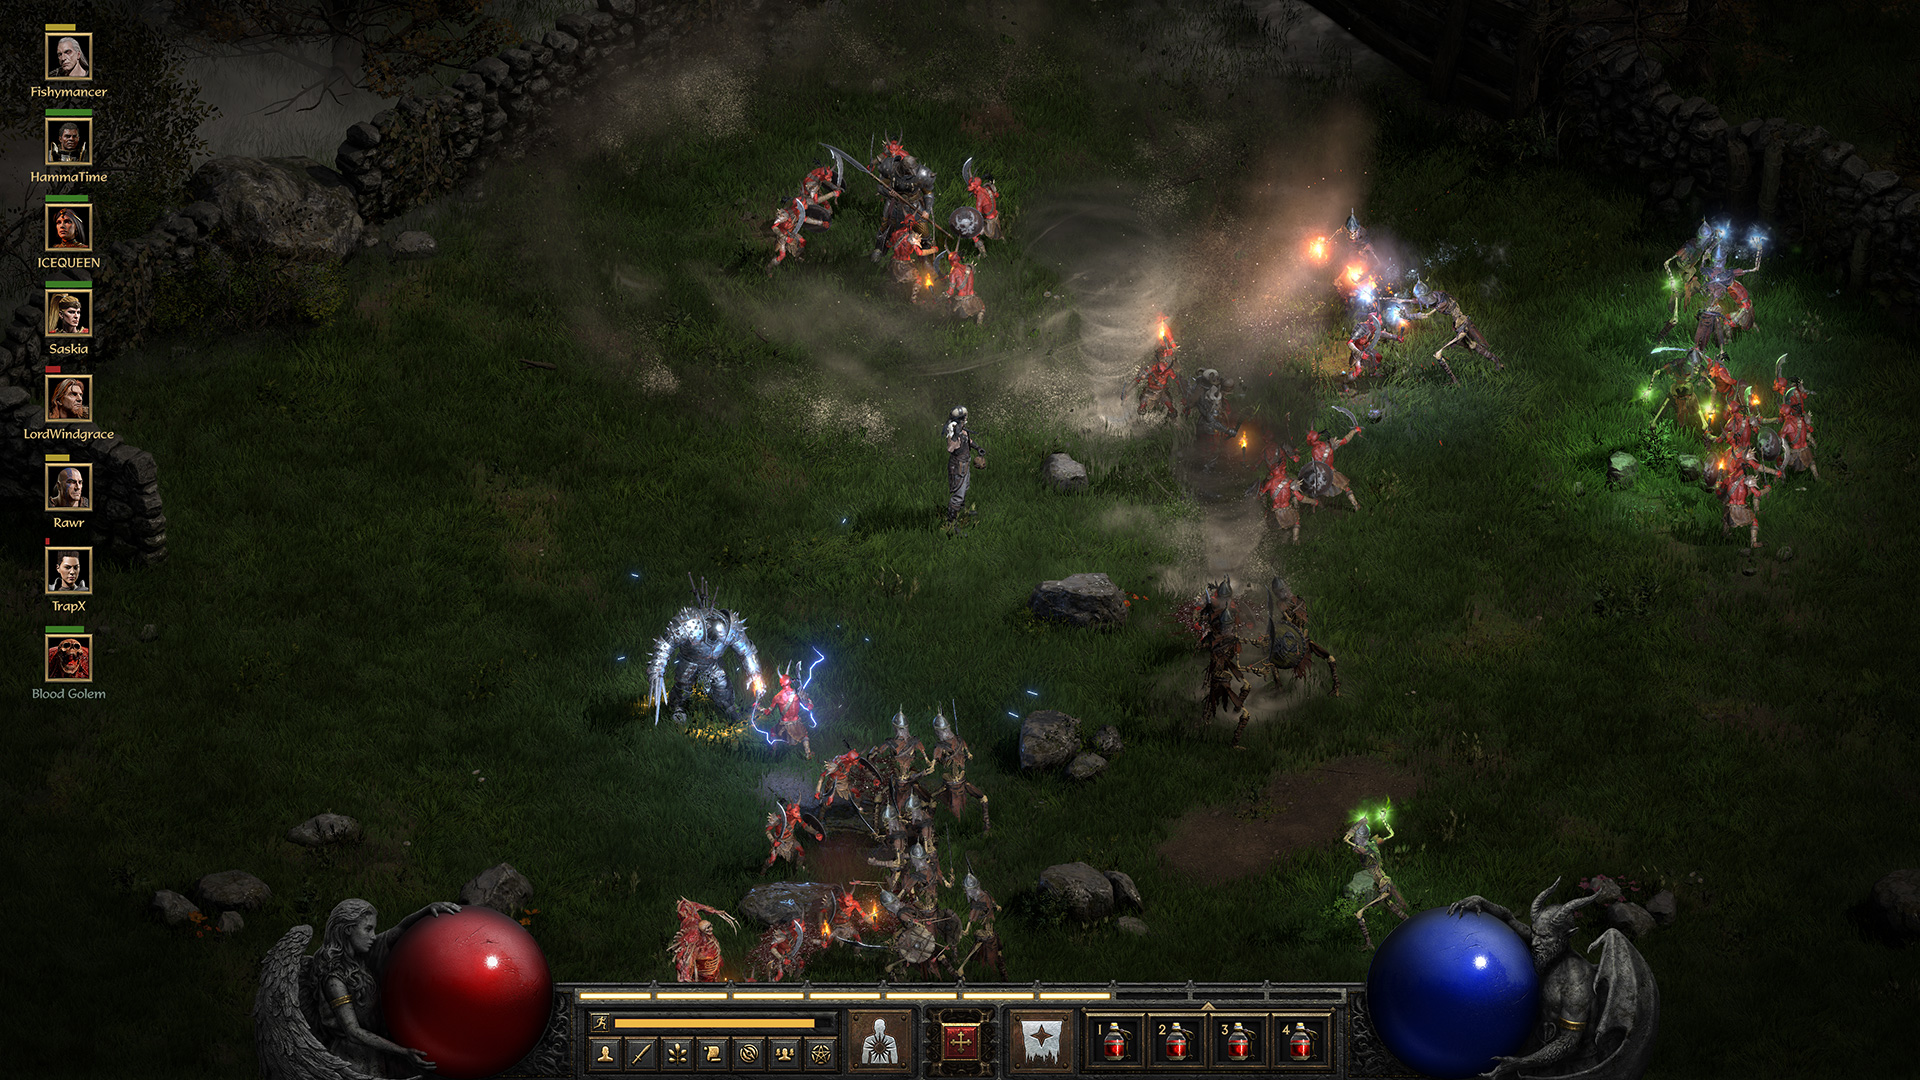 Screenshot of seamless modded multiplayer gameplay